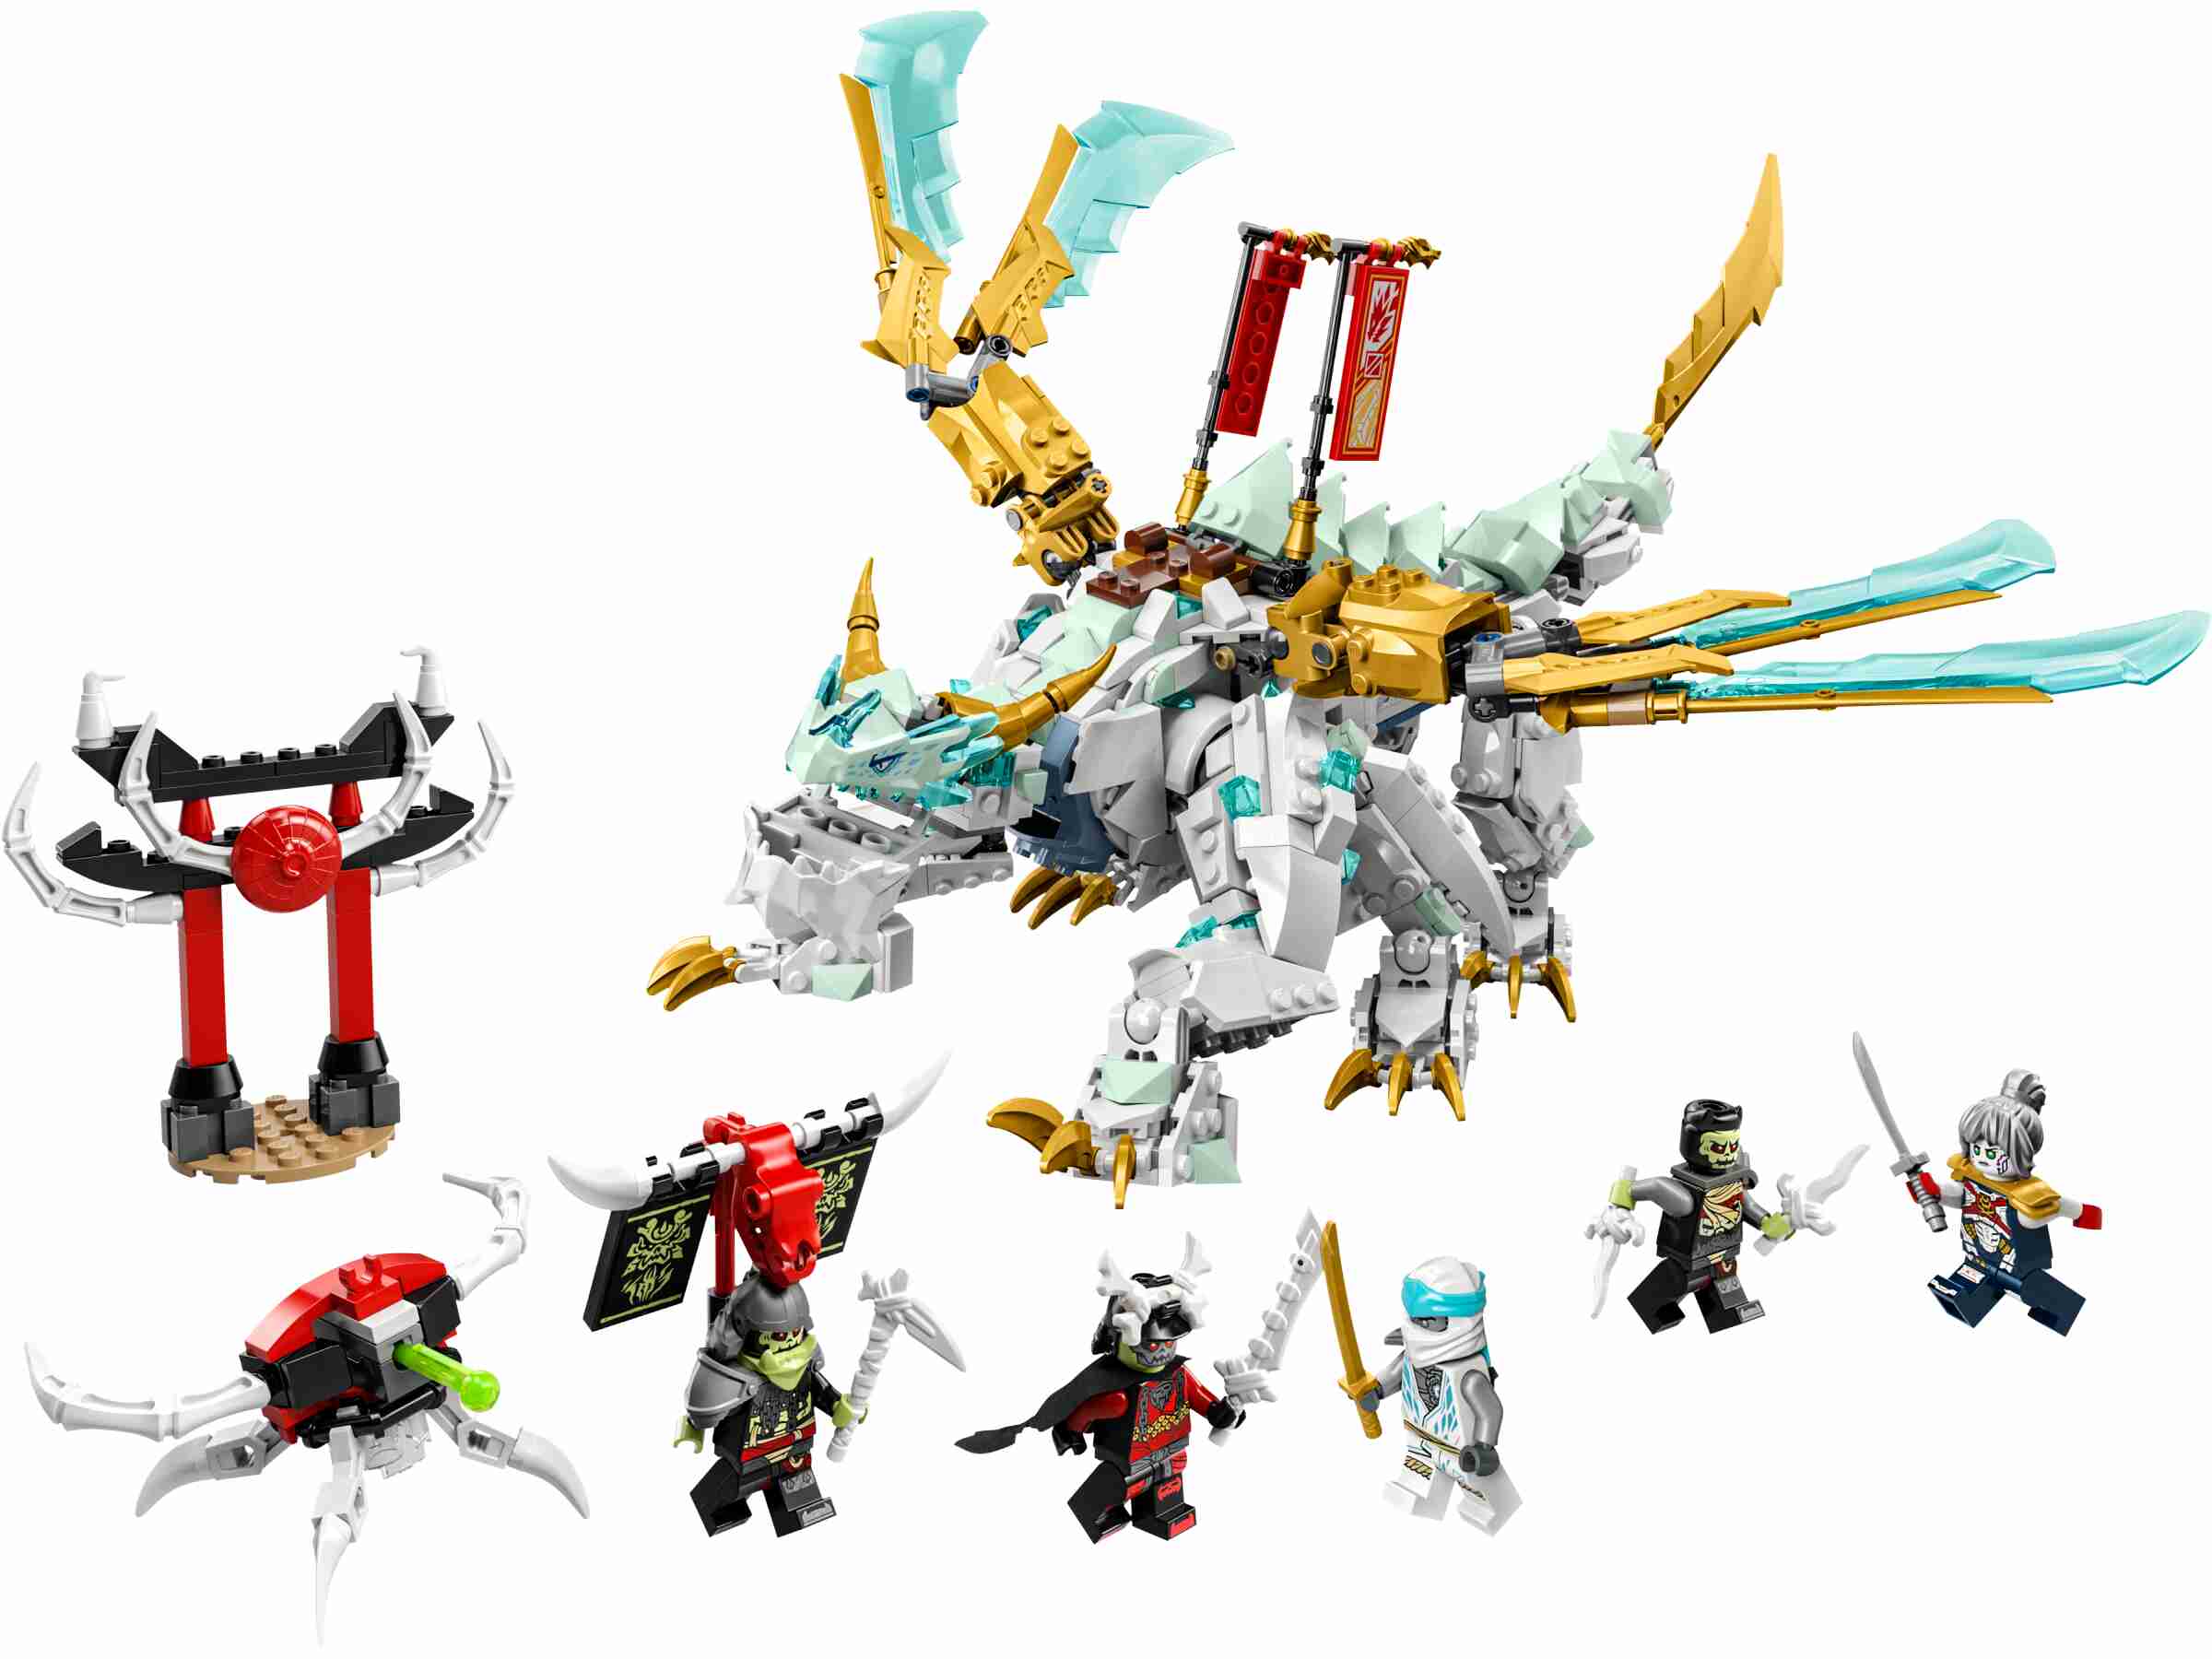 LEGO 71786 NINJAGO Zanes Eisdrache, 2-in-1-Modell,  Zane, Pixal, 3 Bösewichte